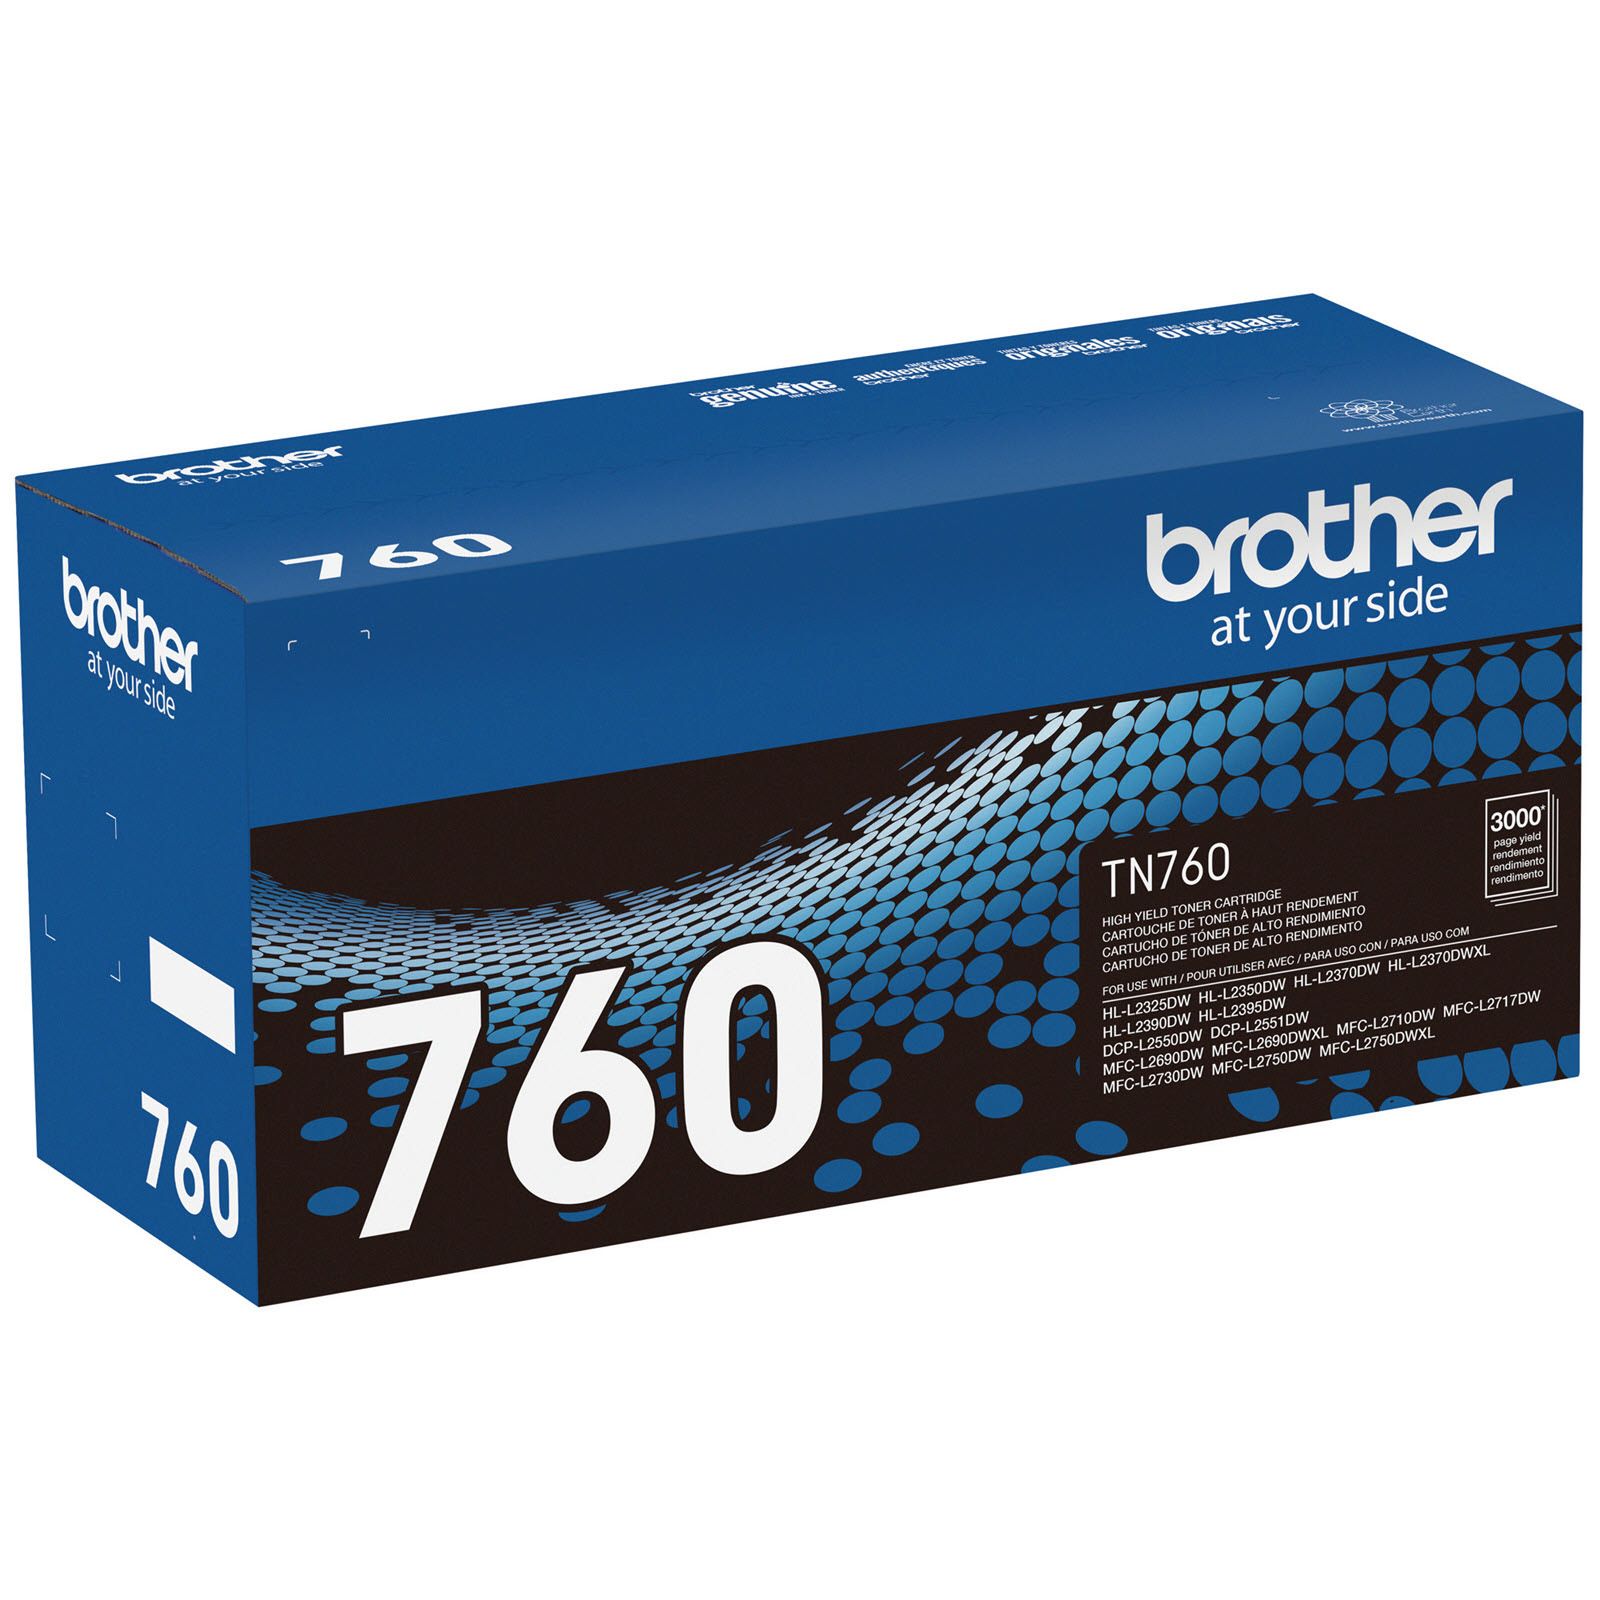 Brother TN-760 Black Toner